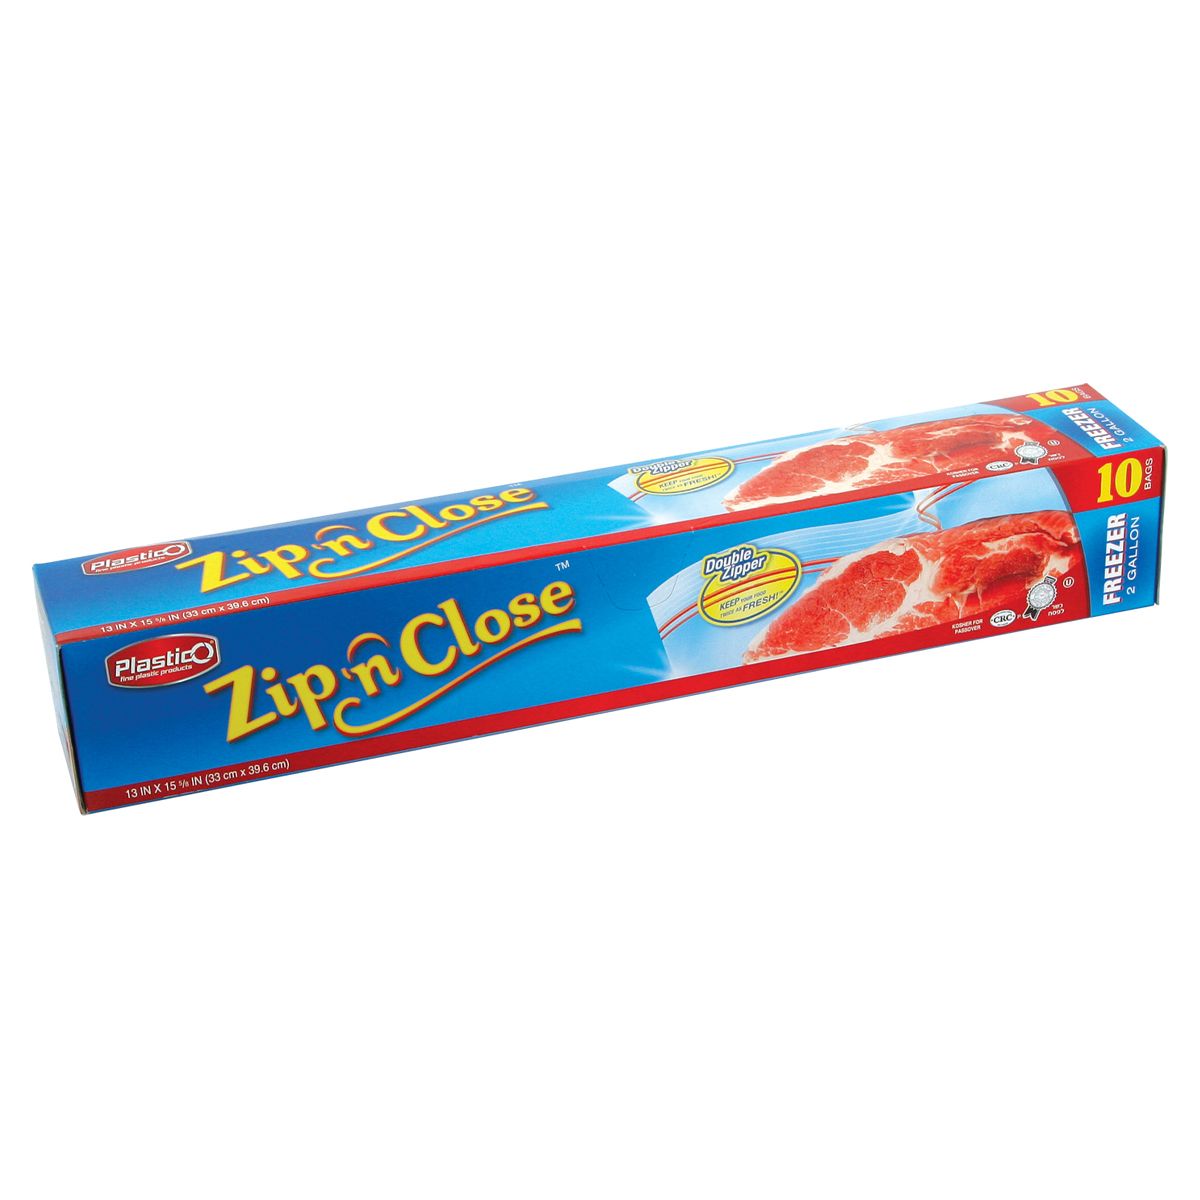 Ziploc Zipper Storage Bags, 2 Gallon, 100 ct, Clear